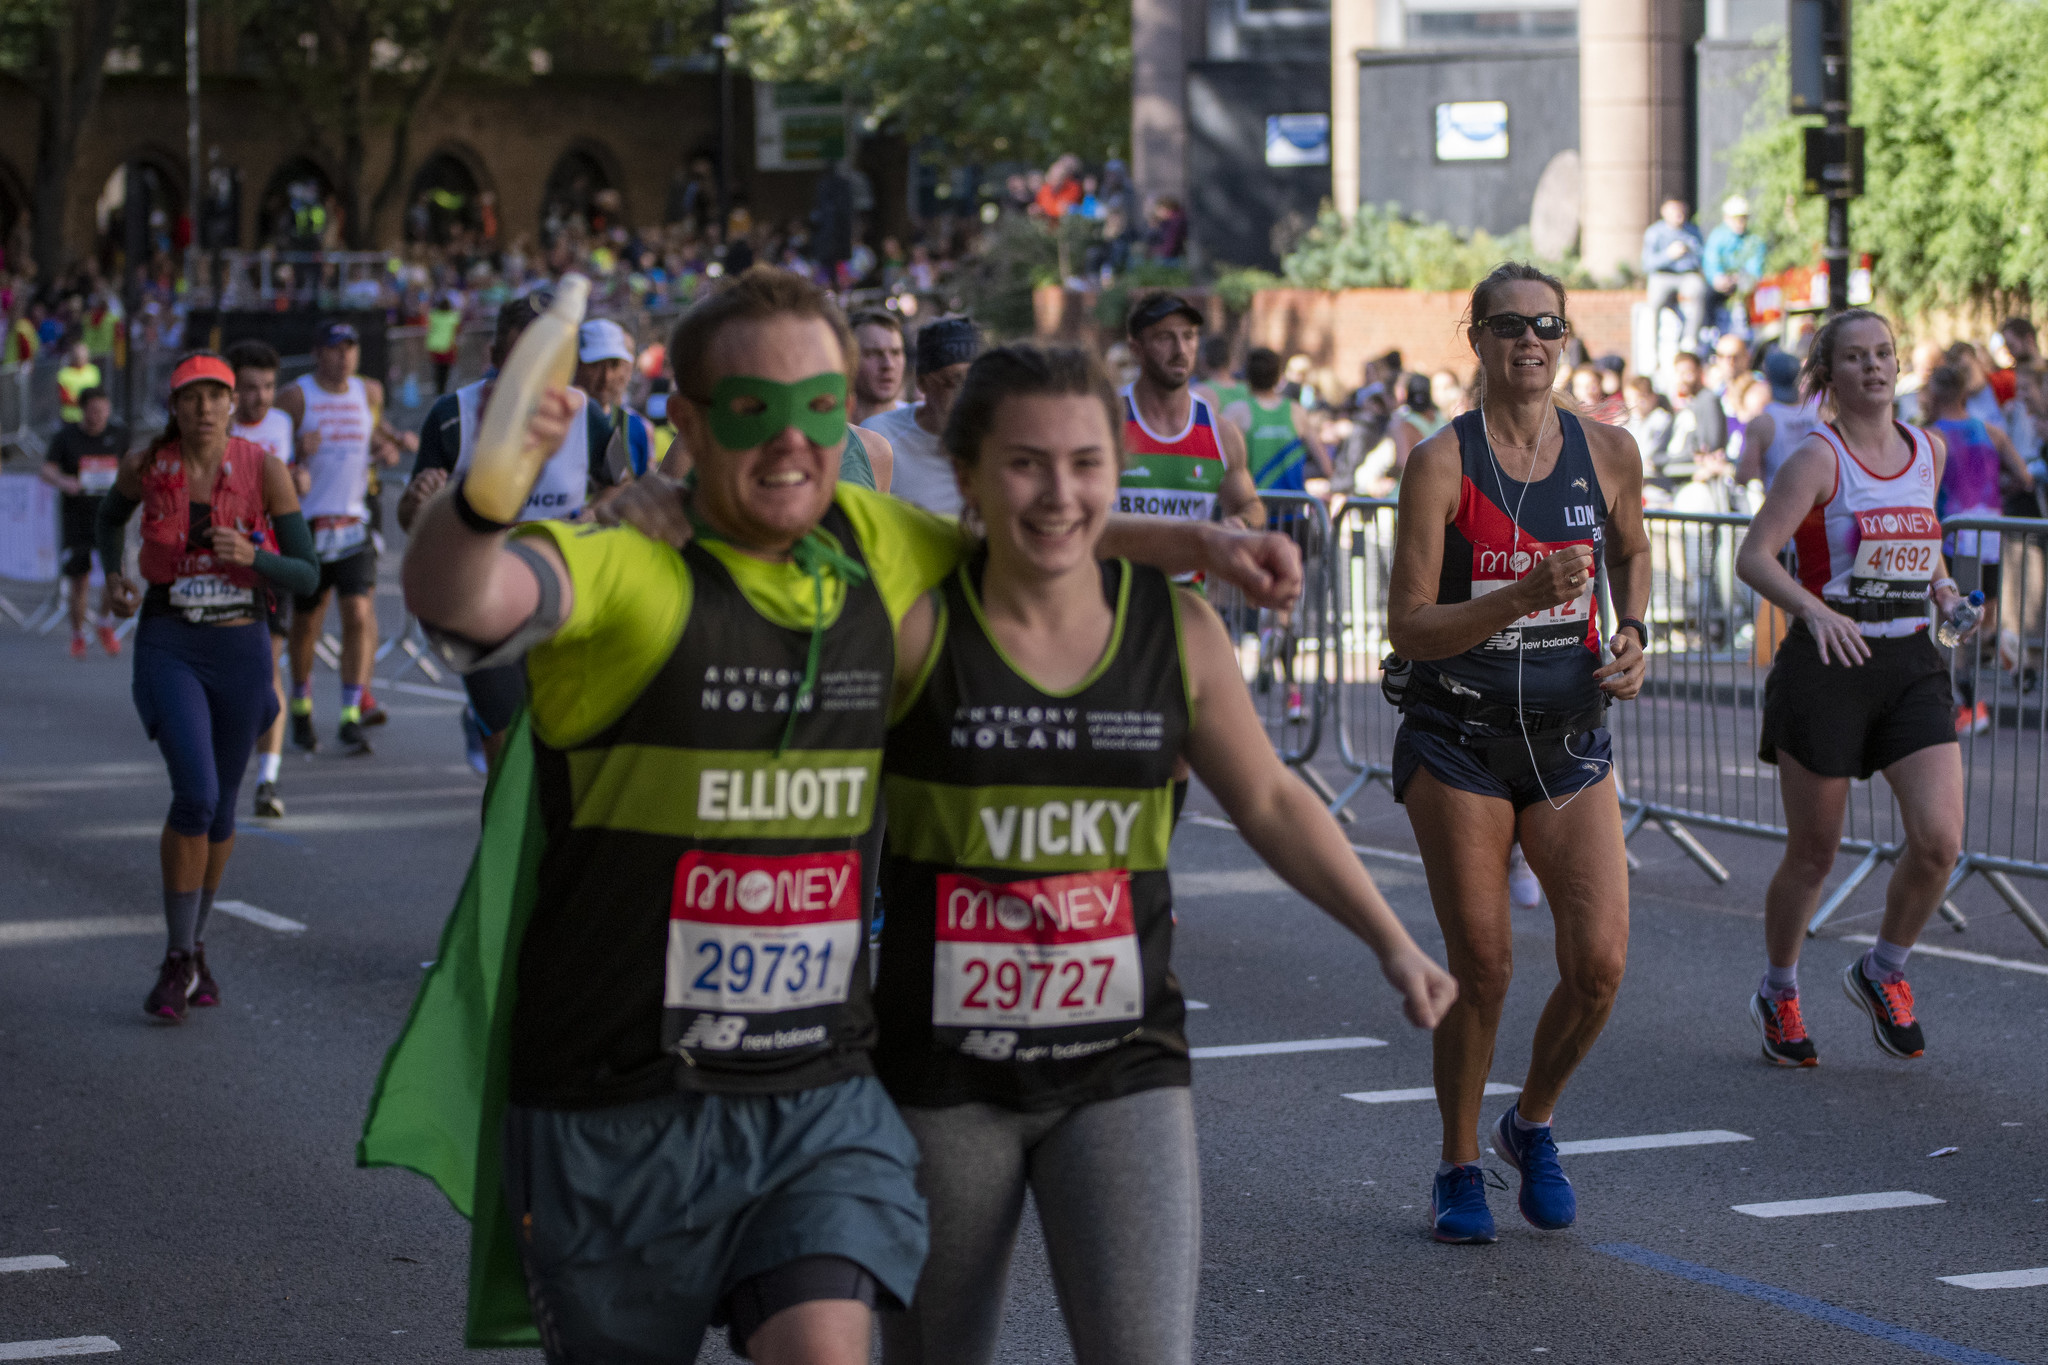 Vicky and Elliott running the London Marathon 